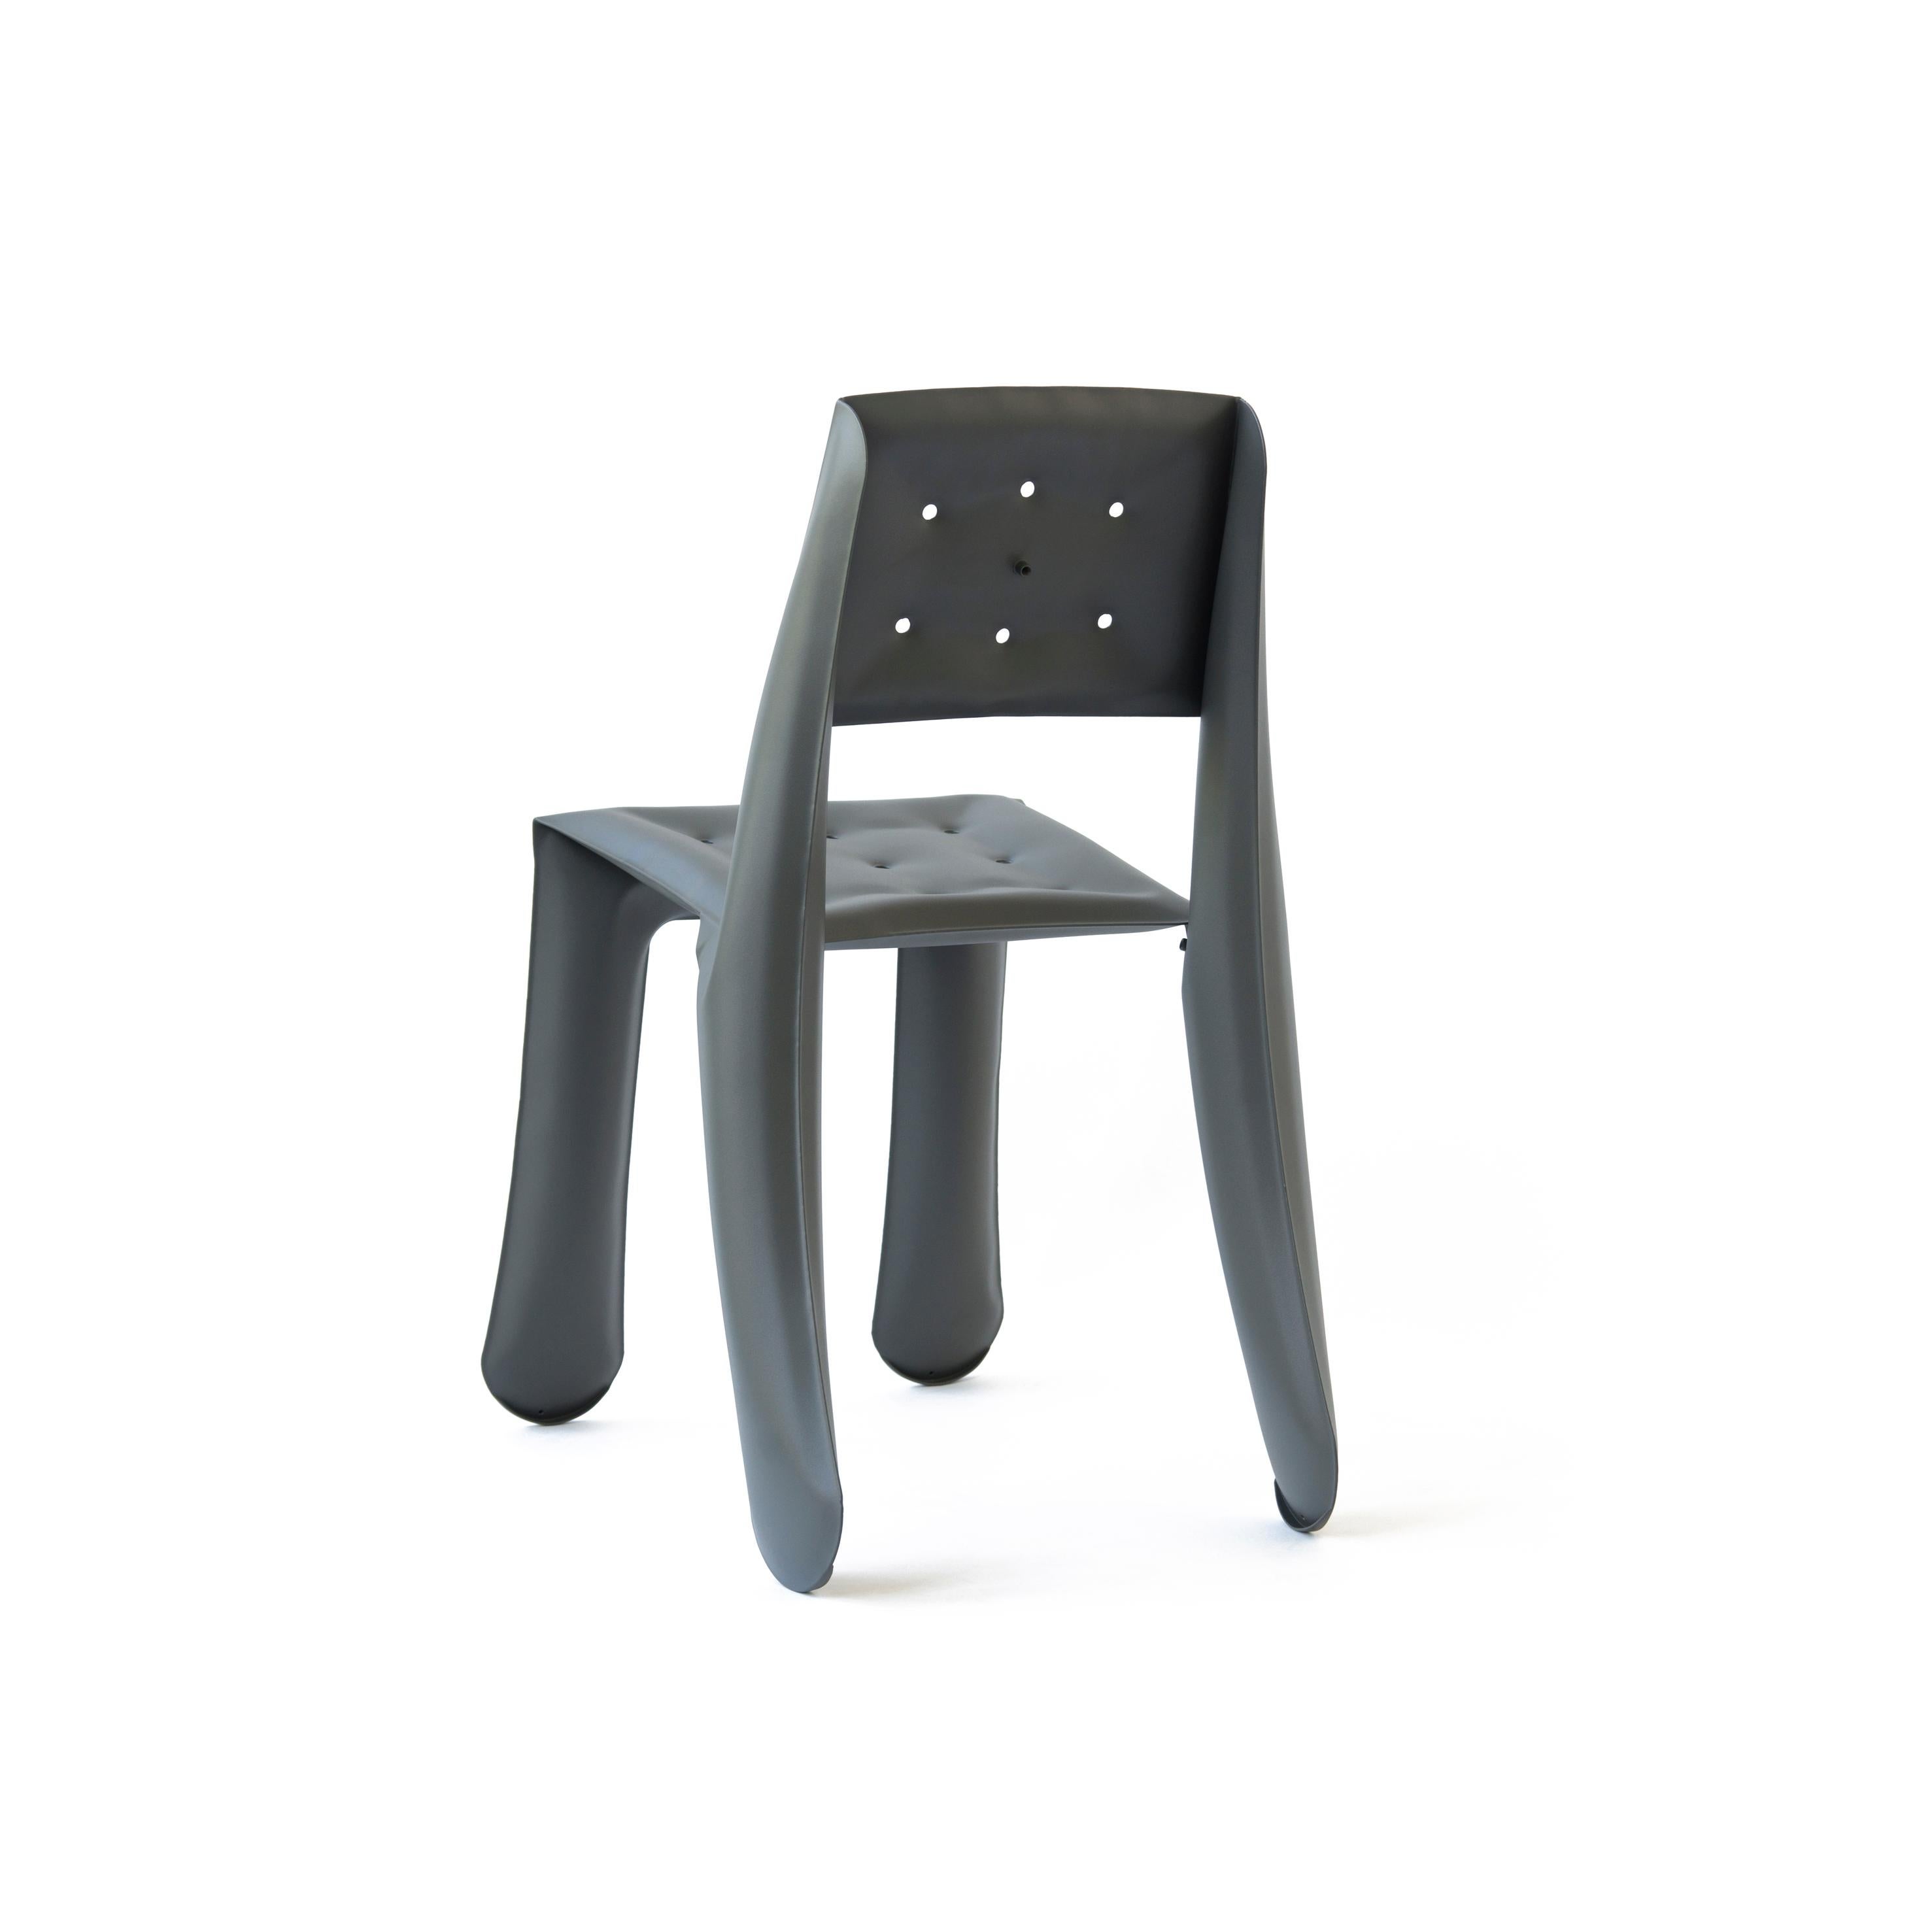 Powder-Coated Umbra Grey Aluminum Chippensteel 0.5 Sculptural Chair by Zieta For Sale